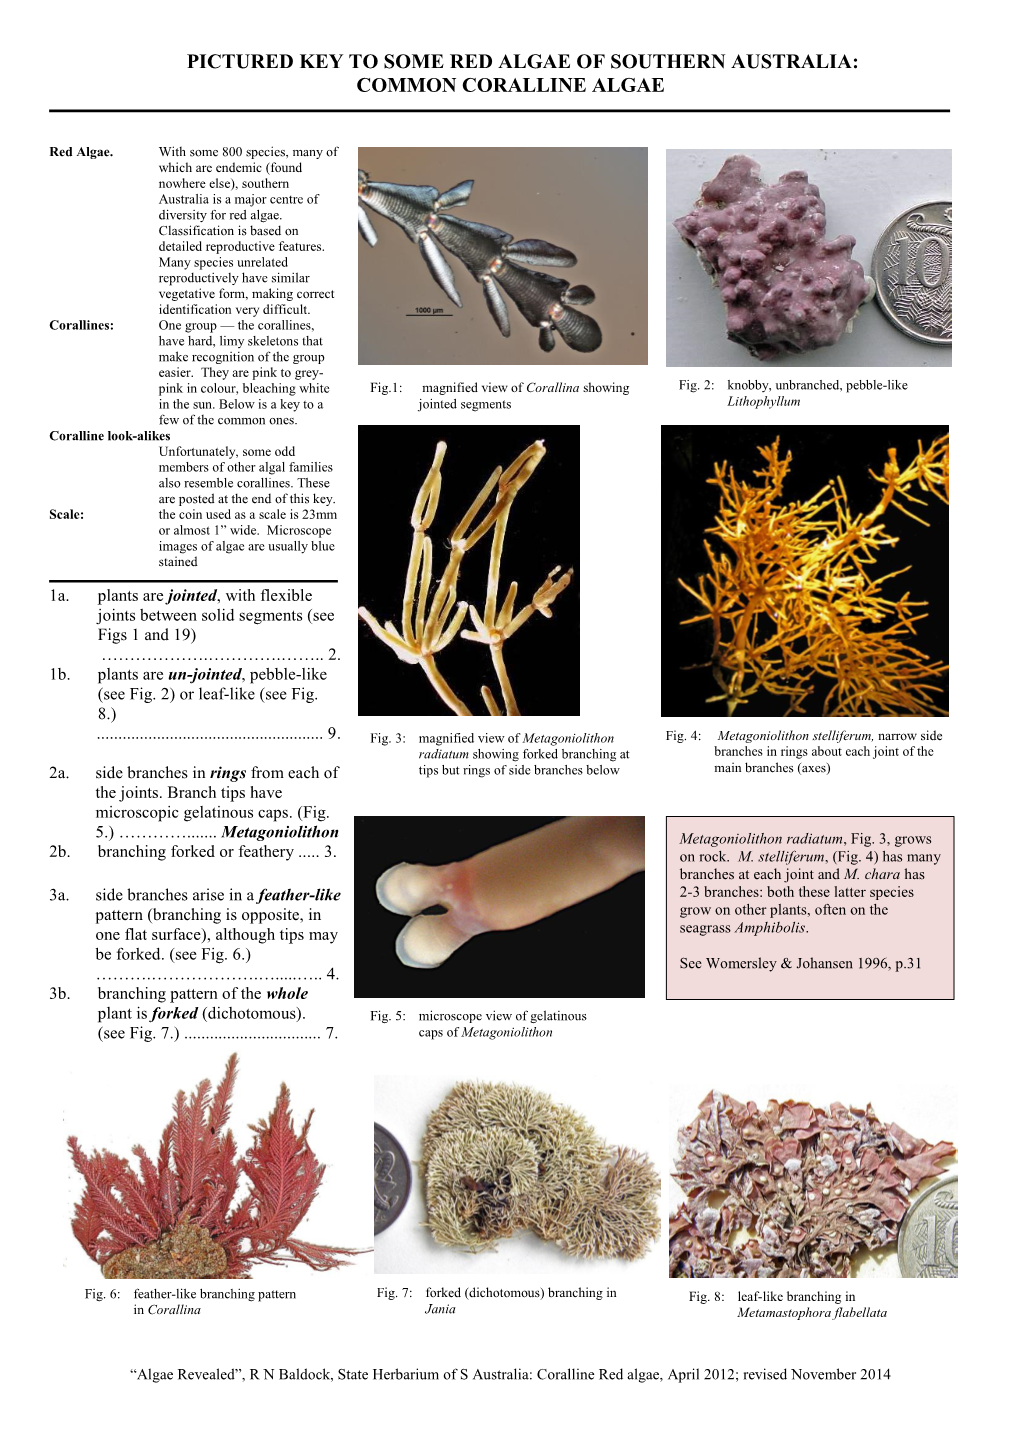 Pictured Key to Some Red Algae of Southern Australia: Common Coralline Algae